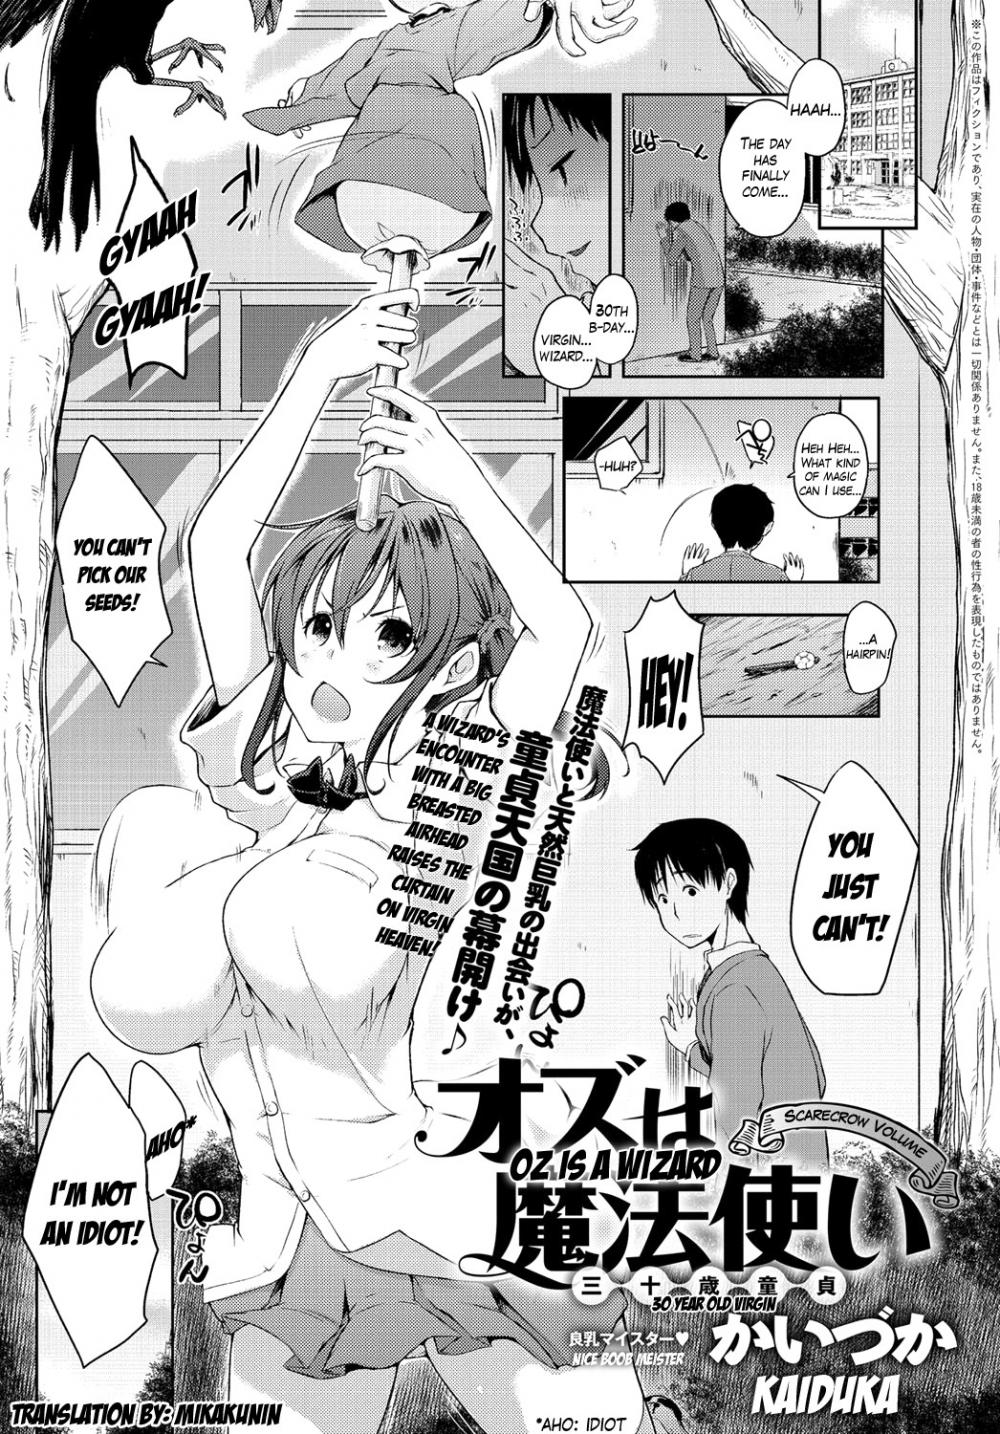 Hentai Manga Comic-Oz is a Wizard (30 year old virgin)-Chapter 1-1